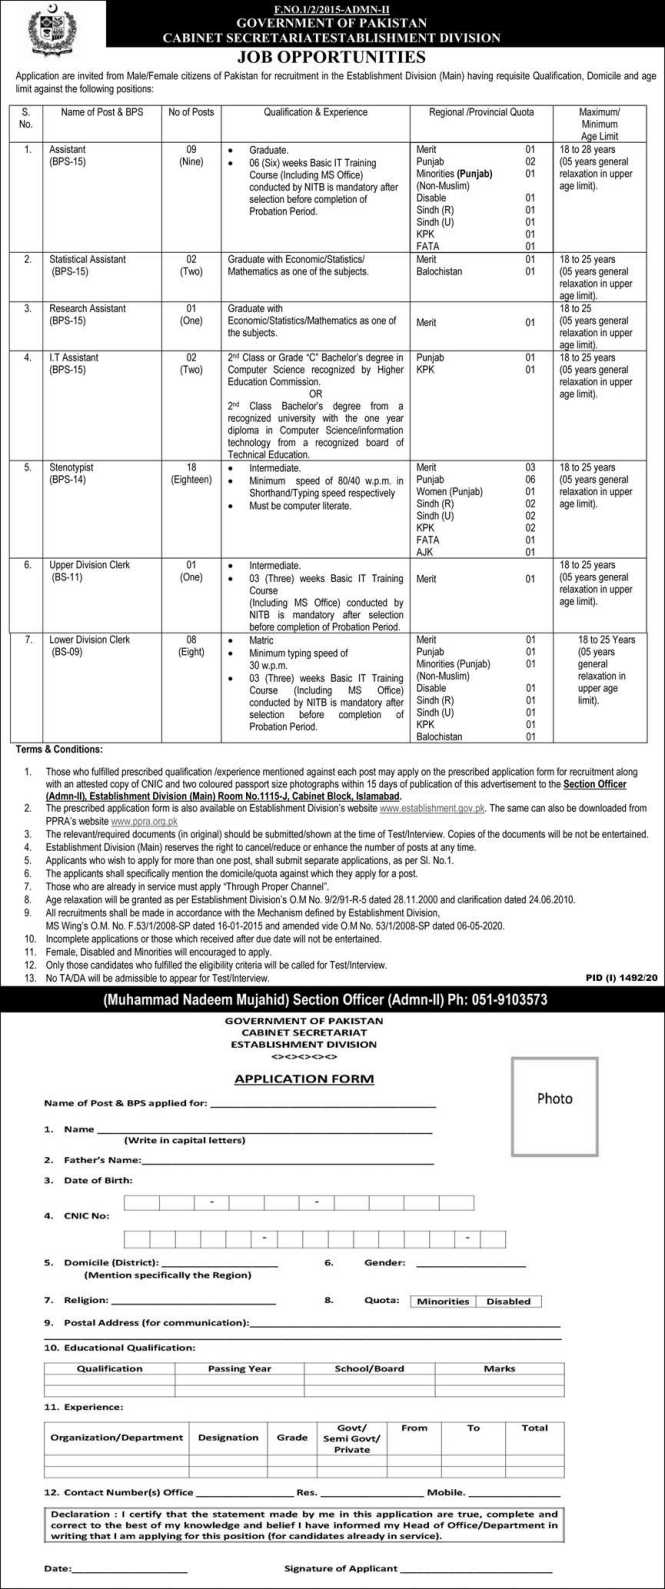 Cabinet Secretariat Islamabad Jobs 2020